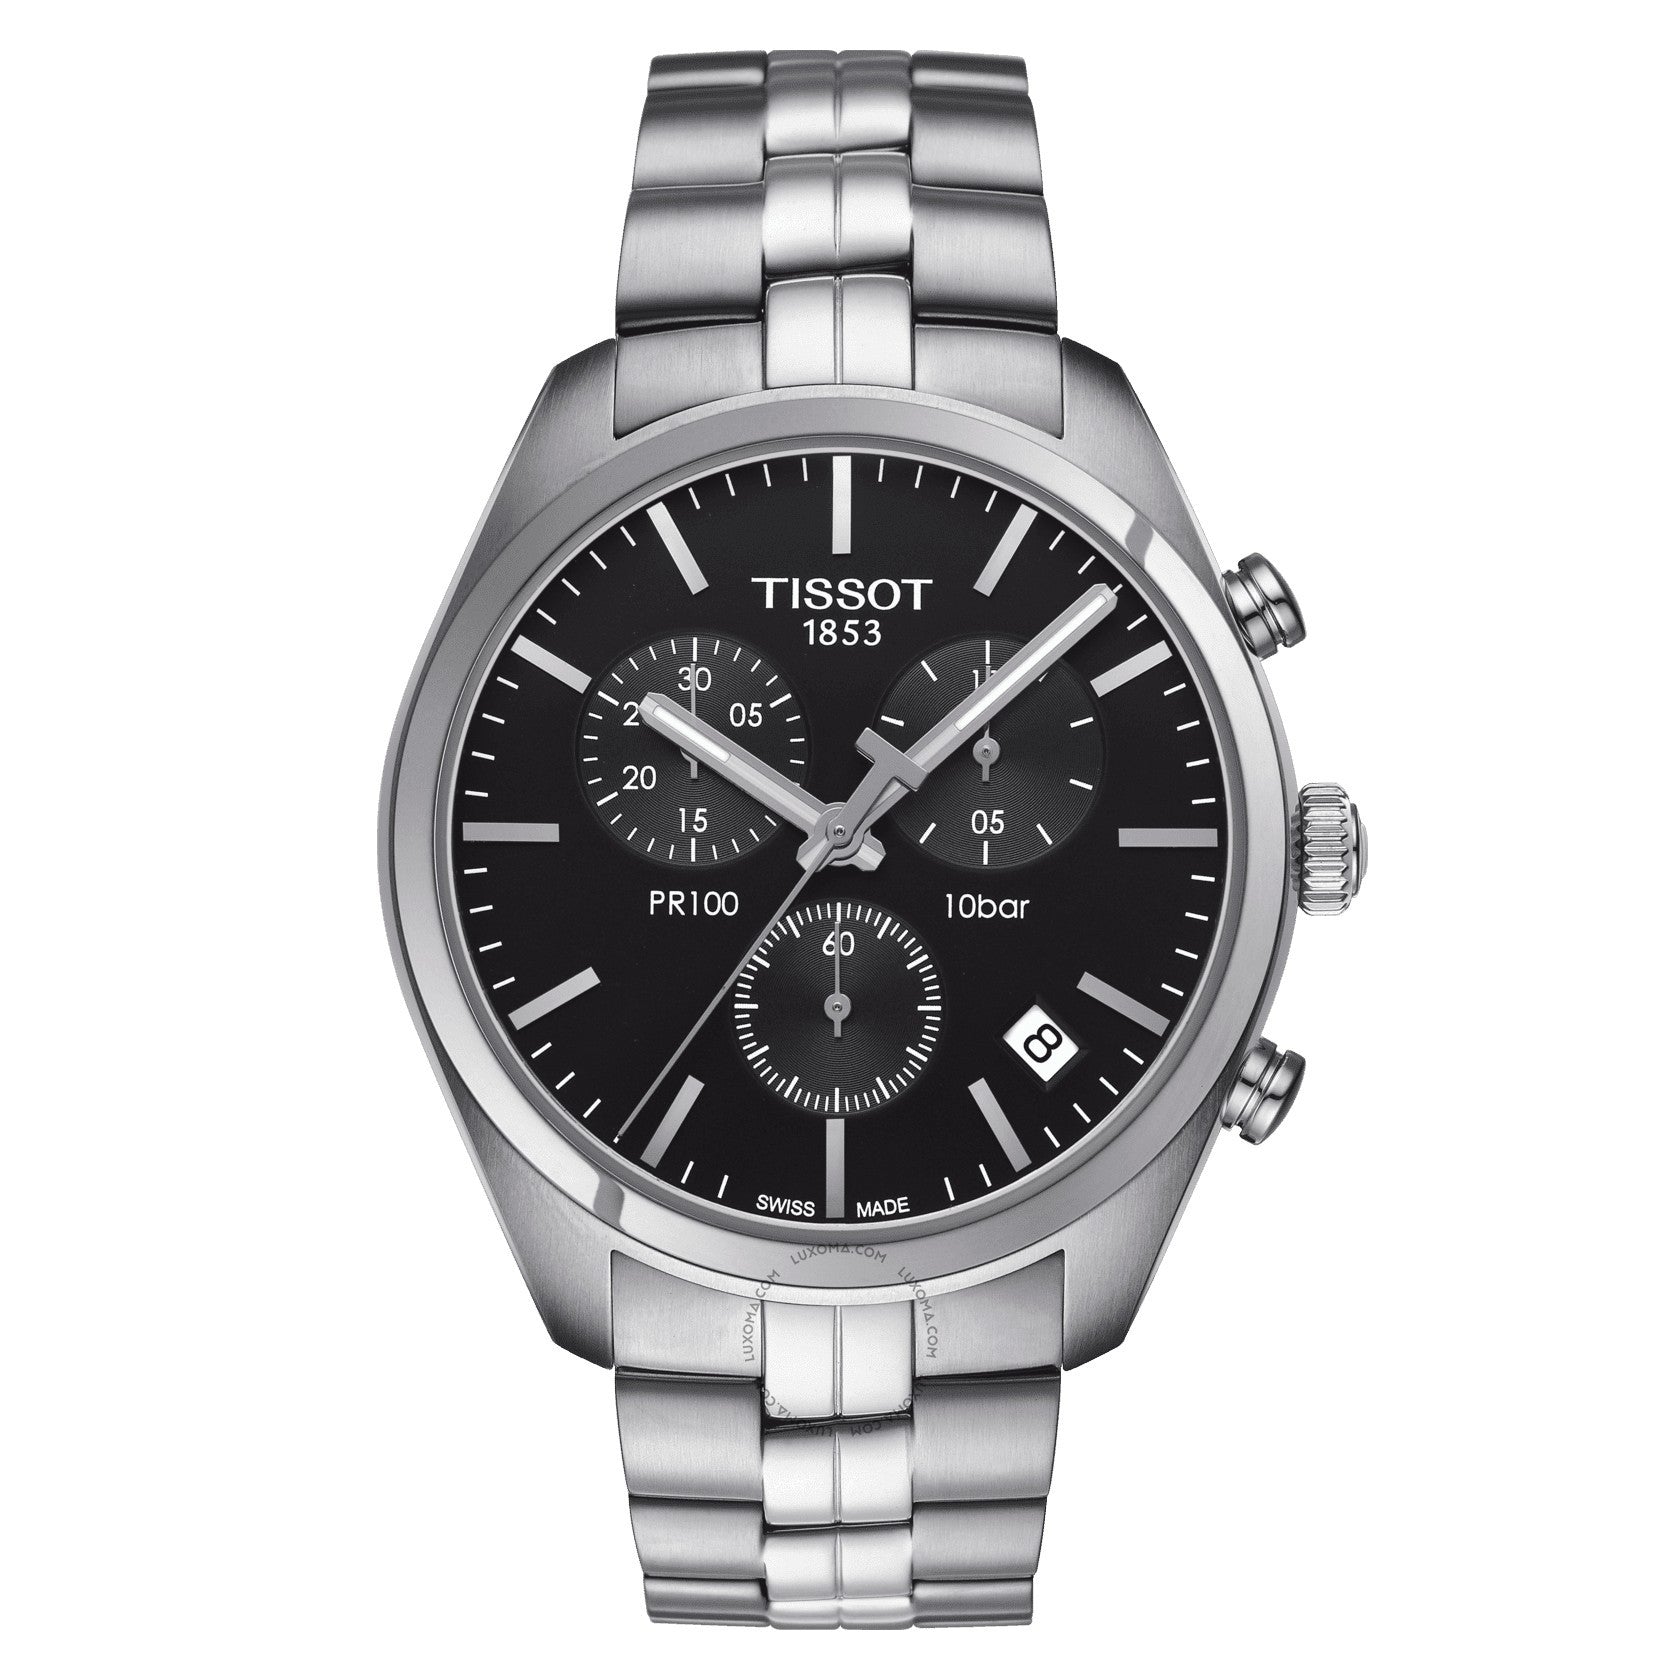 Tissot T-C Chronograph Black Dial Men's Watch T101.417.11.051.00